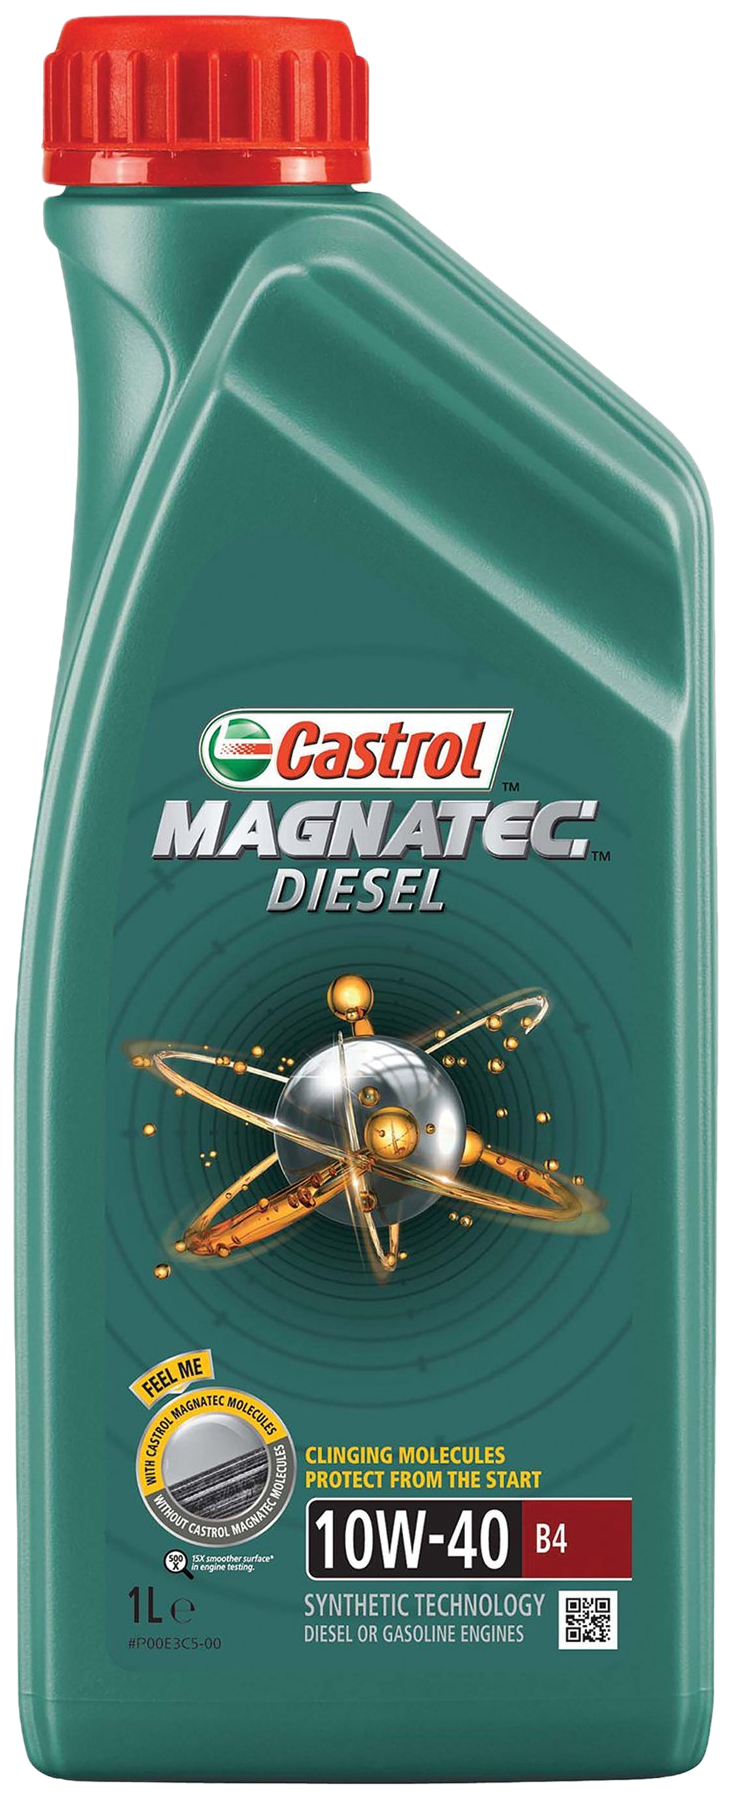 Castrol Magnatec Diesel 10W-40 B4, 1 lt